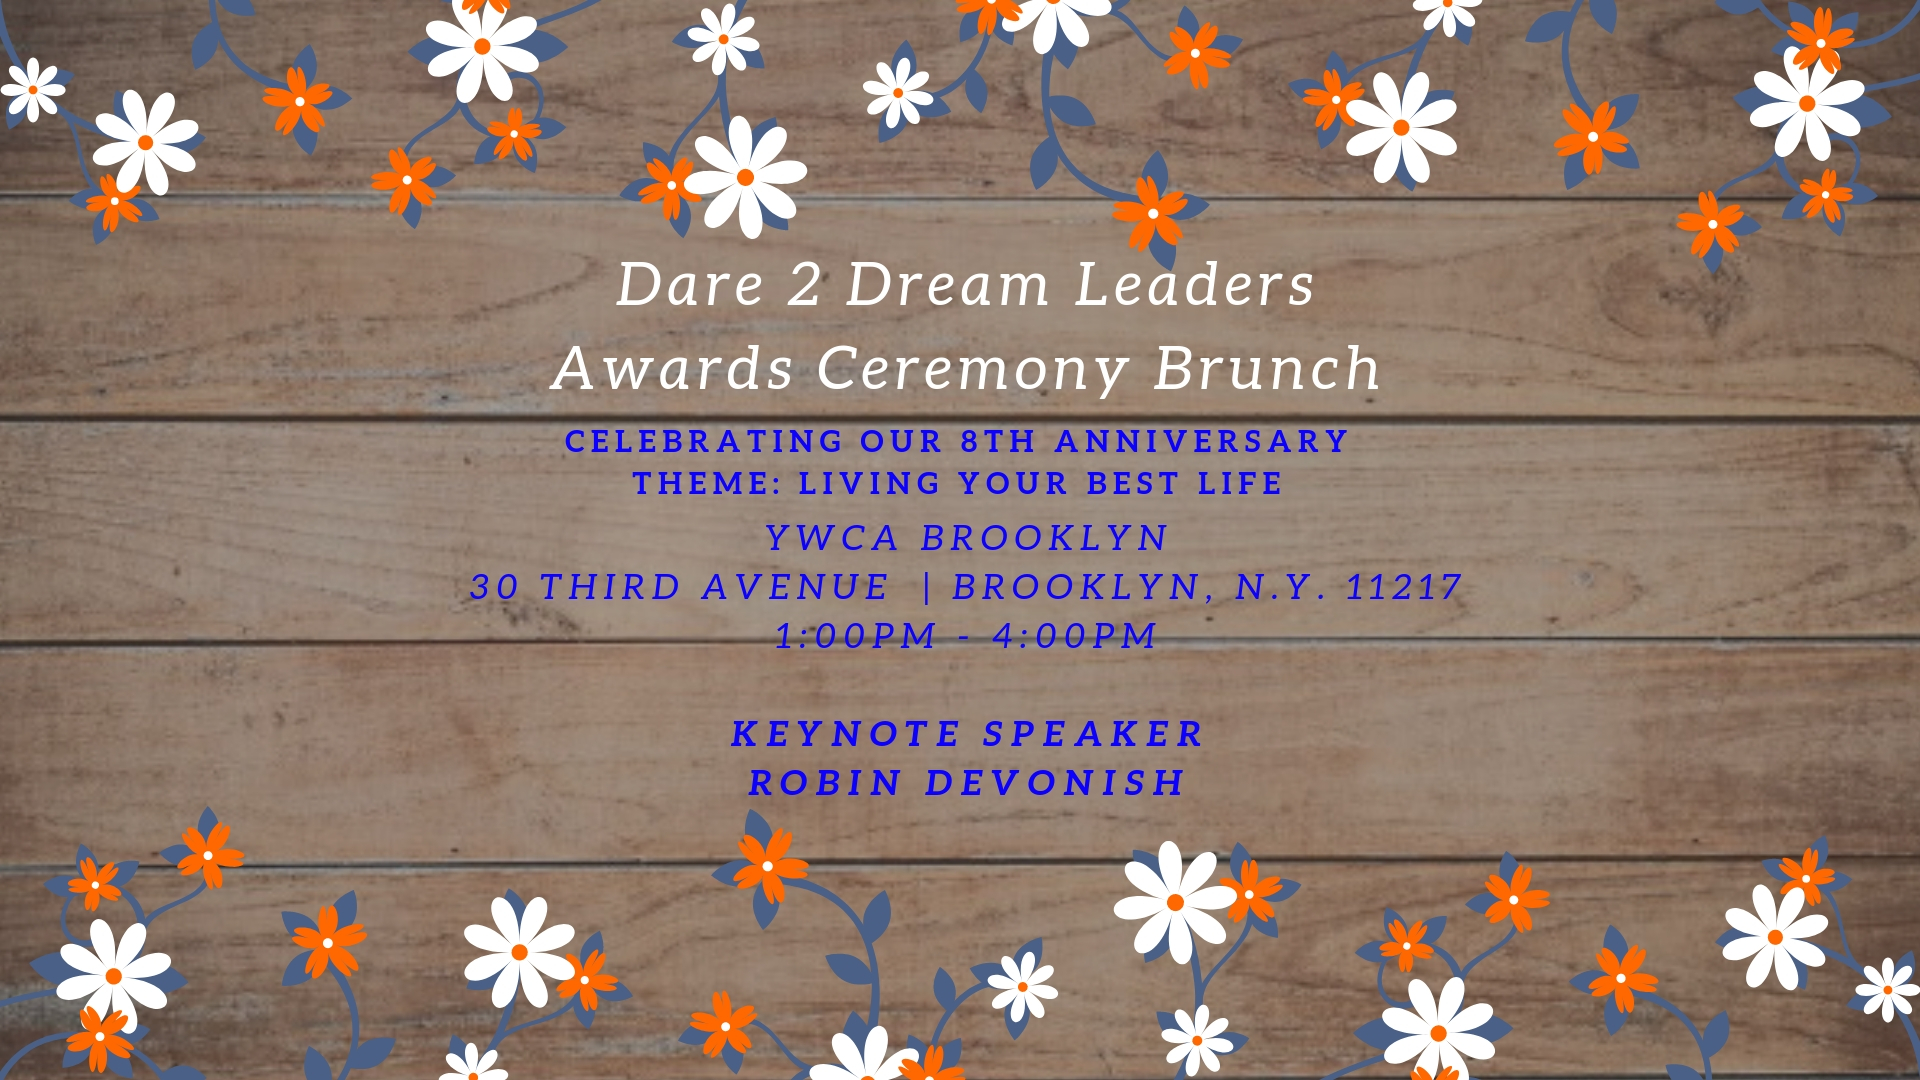 Dare 2 Dream Leaders Awards Ceremony Brunch